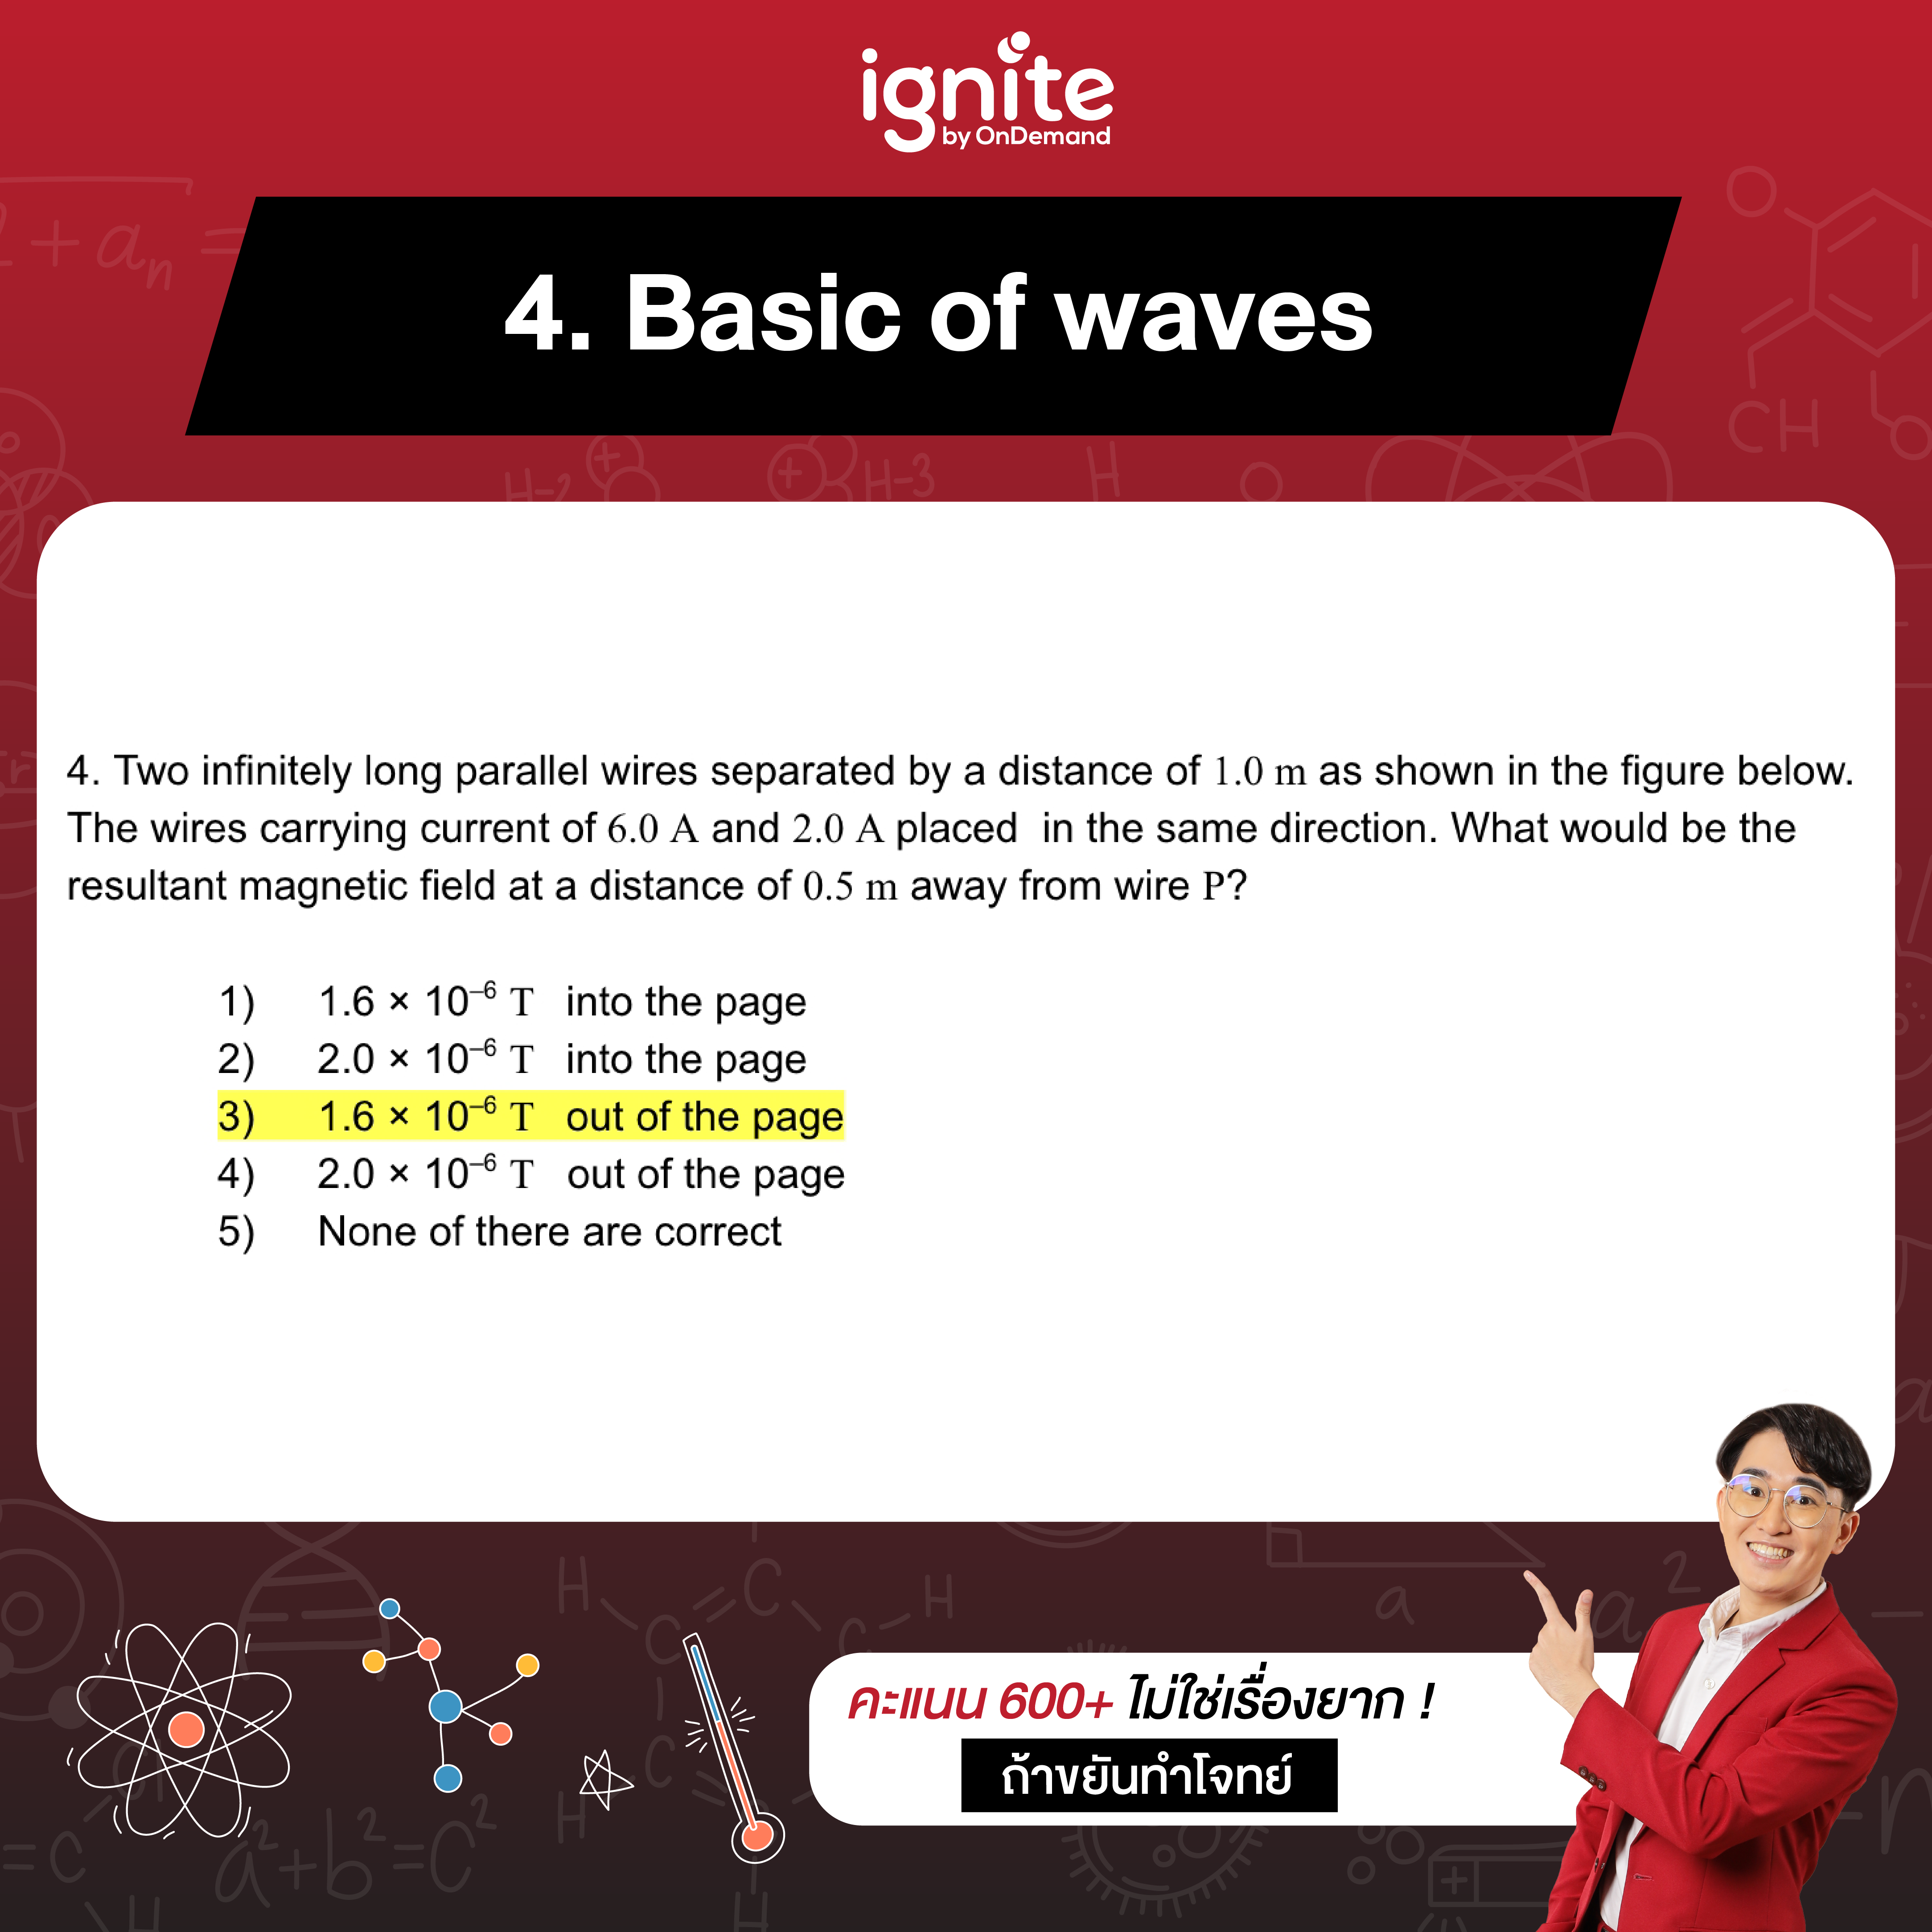 Basic of waves CU-ATS - Physics - Jan 2023 - ignite by OnDemand